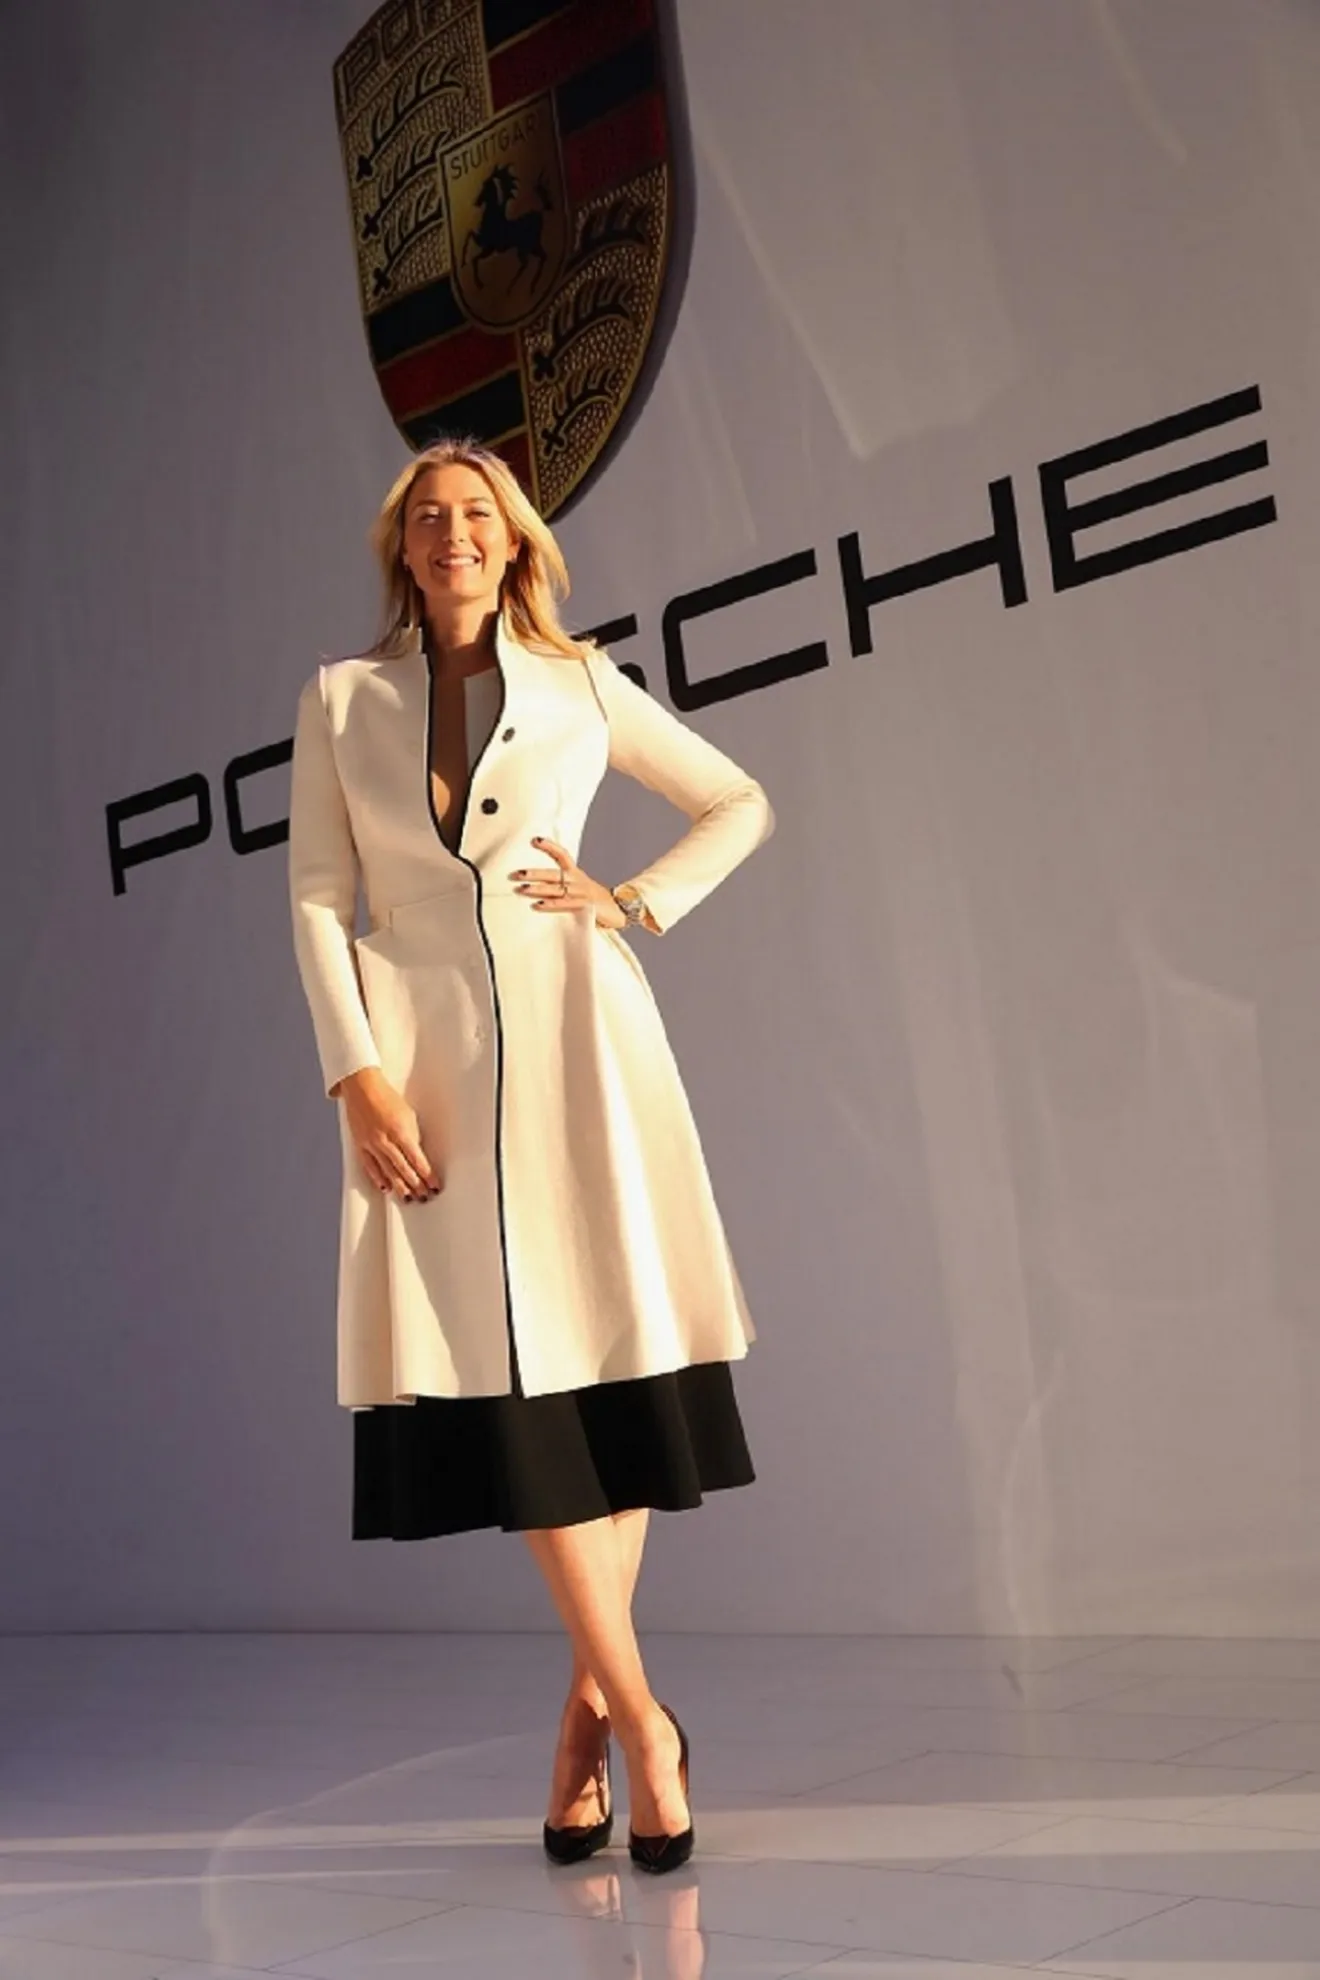 Porsche hace entrega de un Panamera GTS a Maria Sharápova